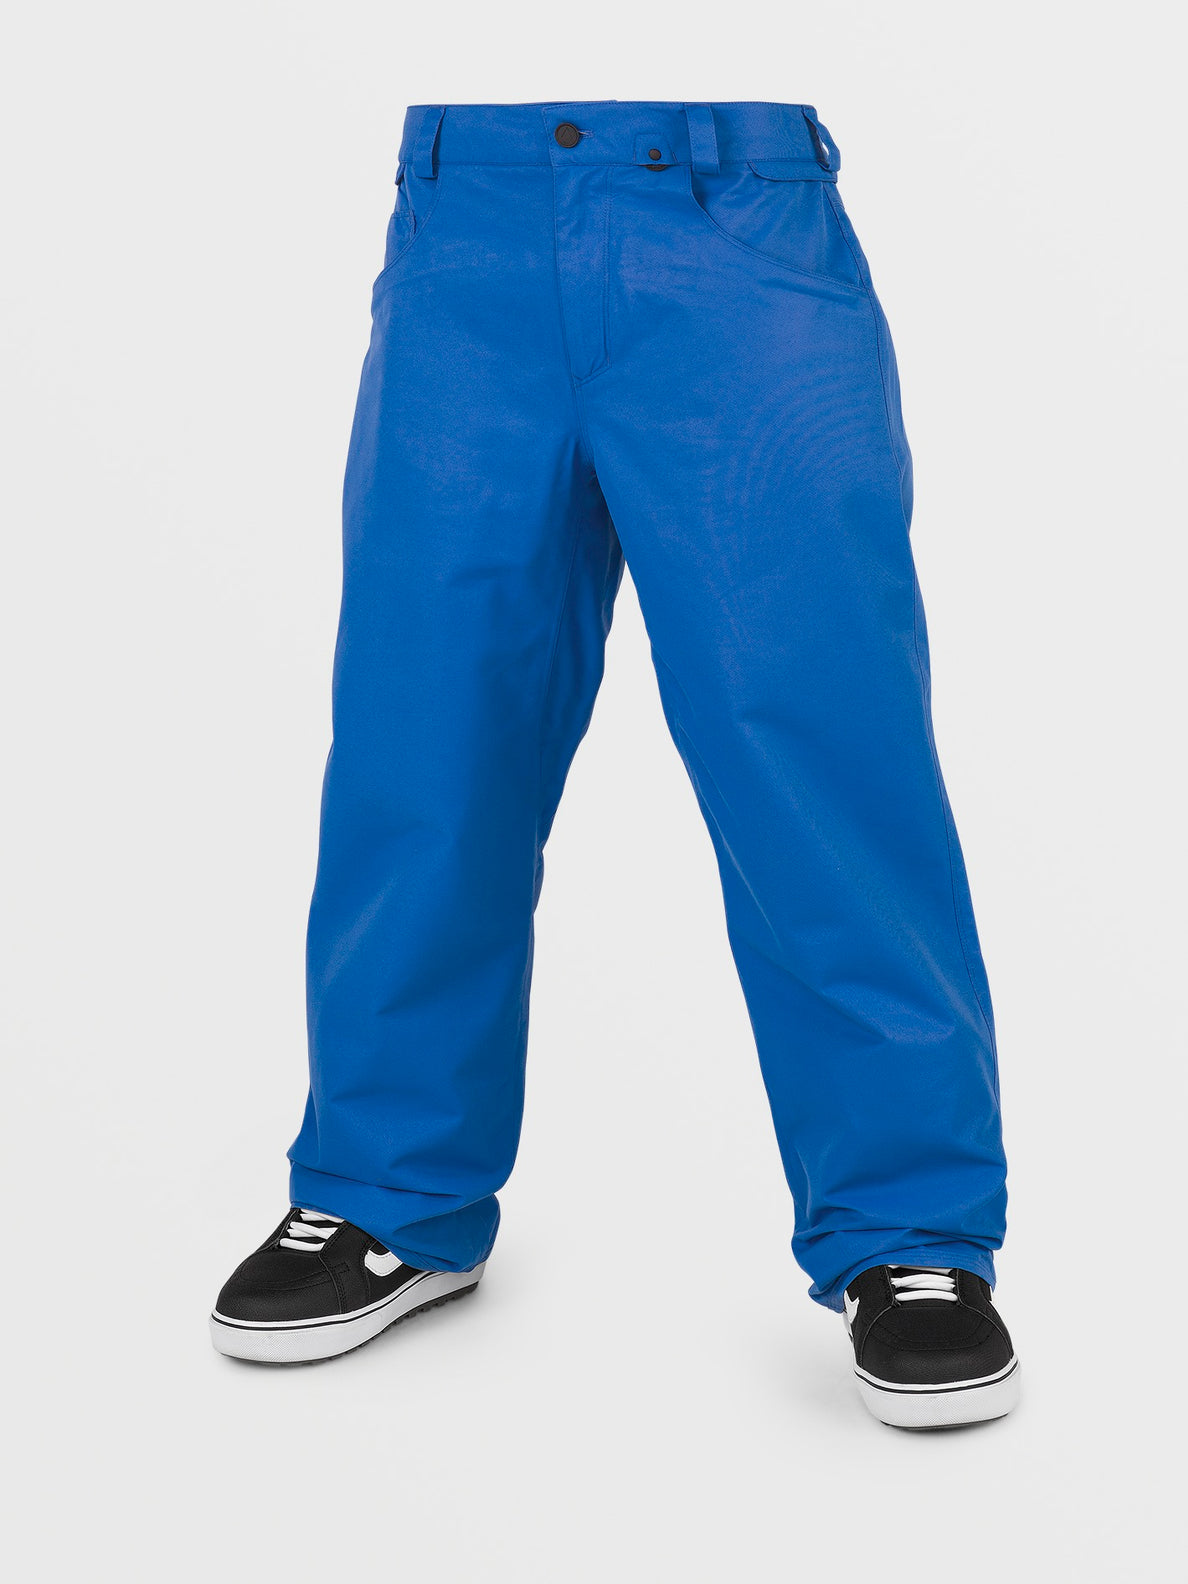 Mens 5-Pocket Pants - Electric Blue (G1352416_EBL) [F]